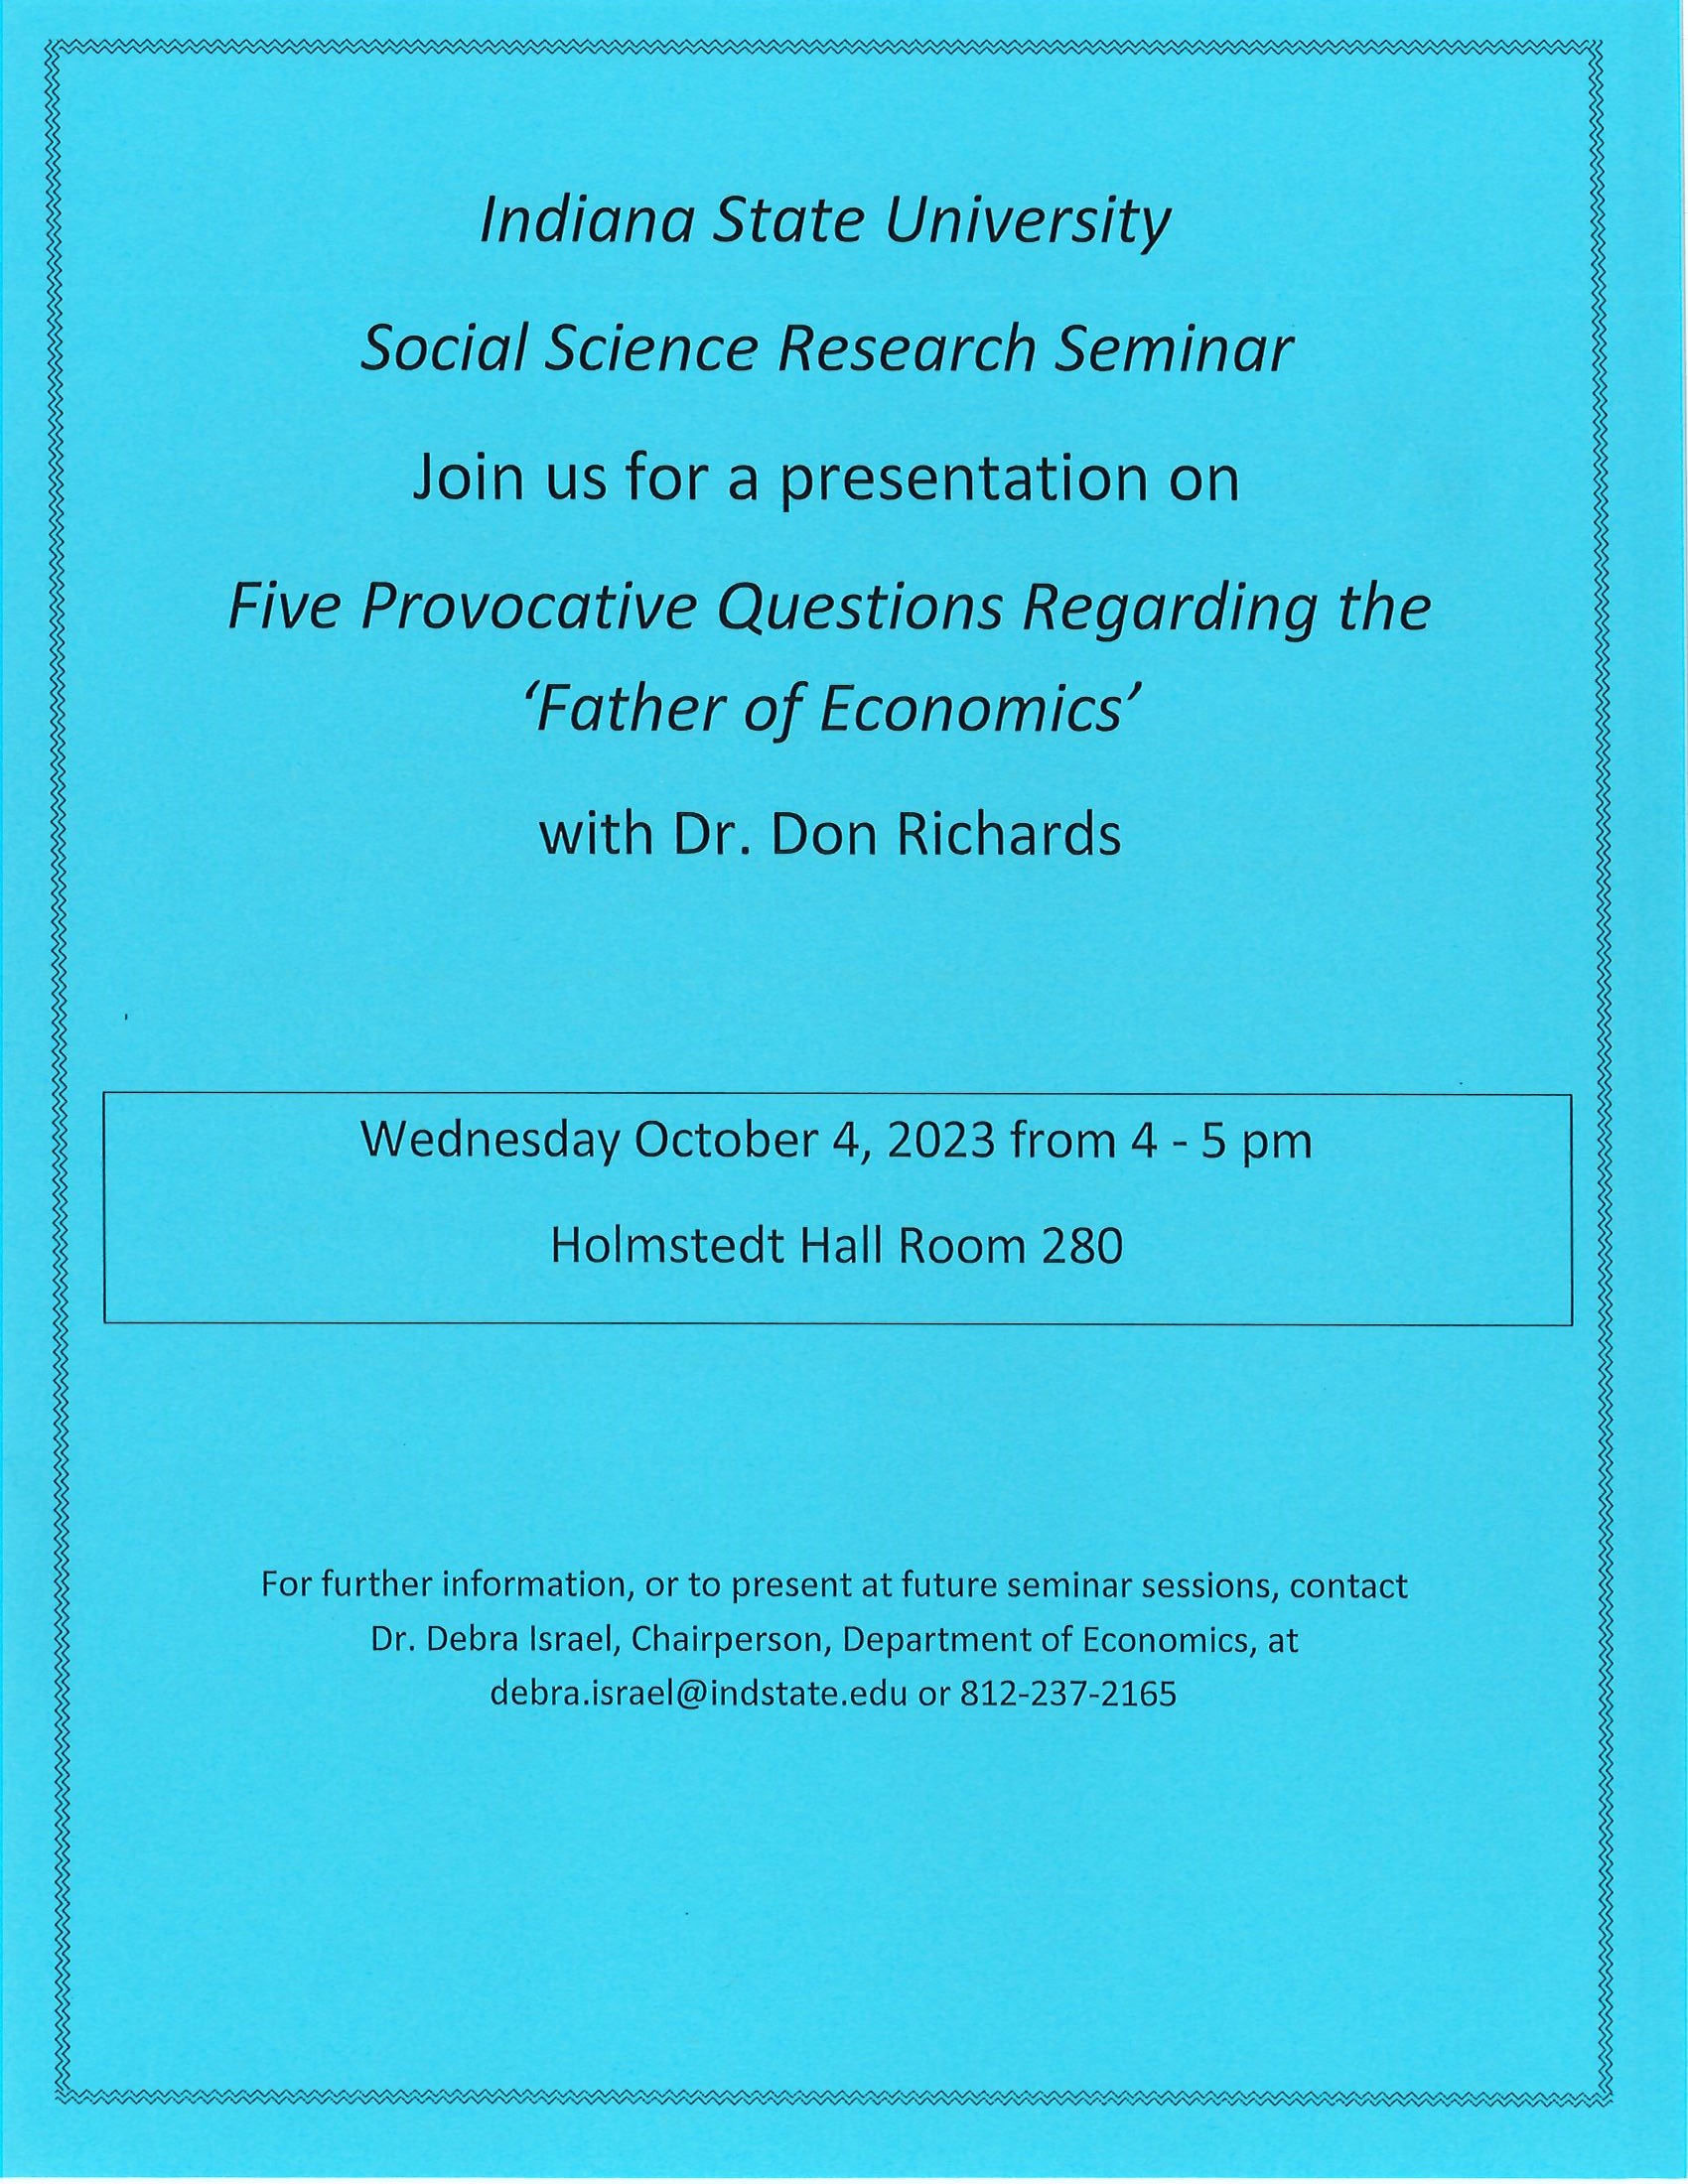 Don Richards Social Research Science Seminar